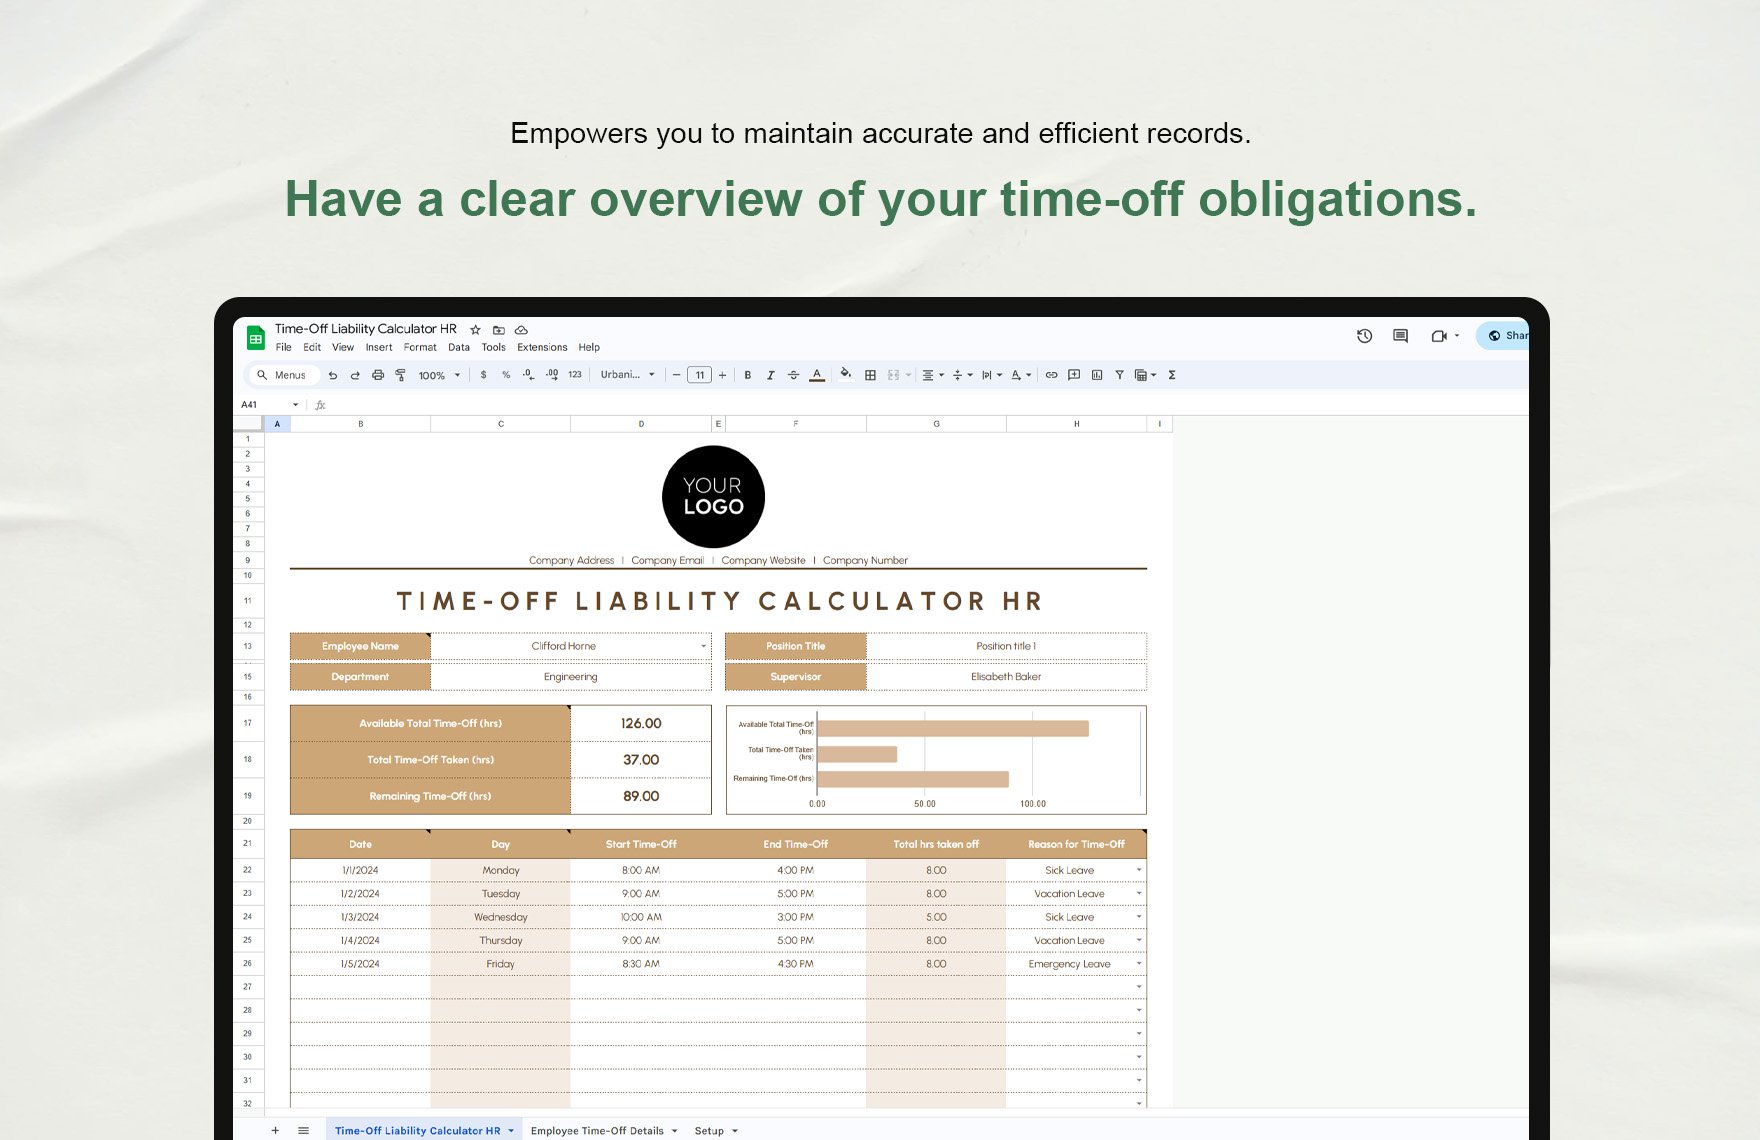 Time-Off Liability Calculator HR Template